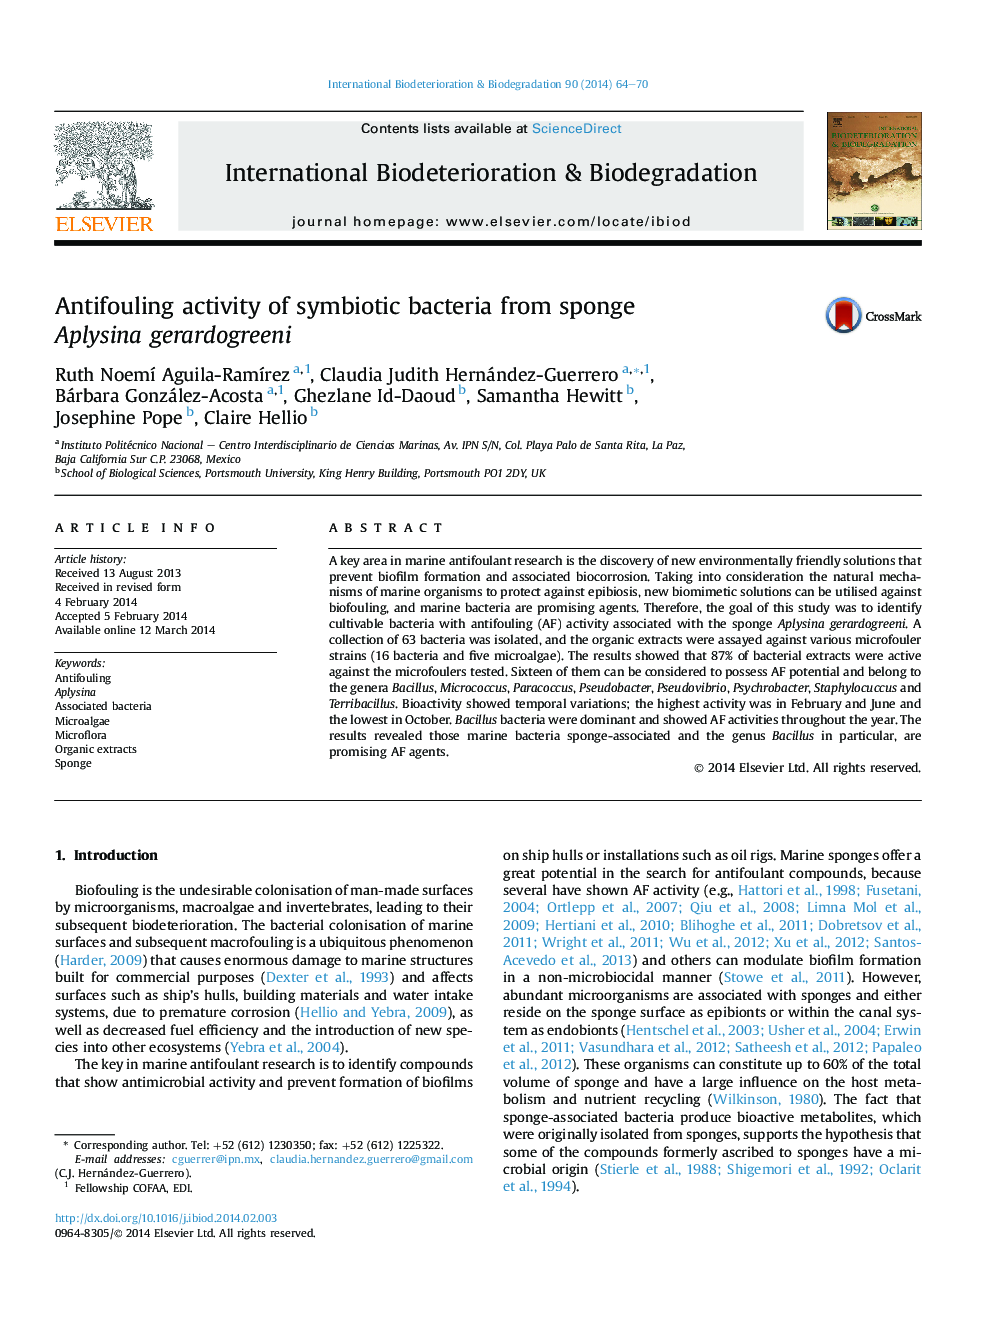 Antifouling activity of symbiotic bacteria from sponge Aplysina gerardogreeni